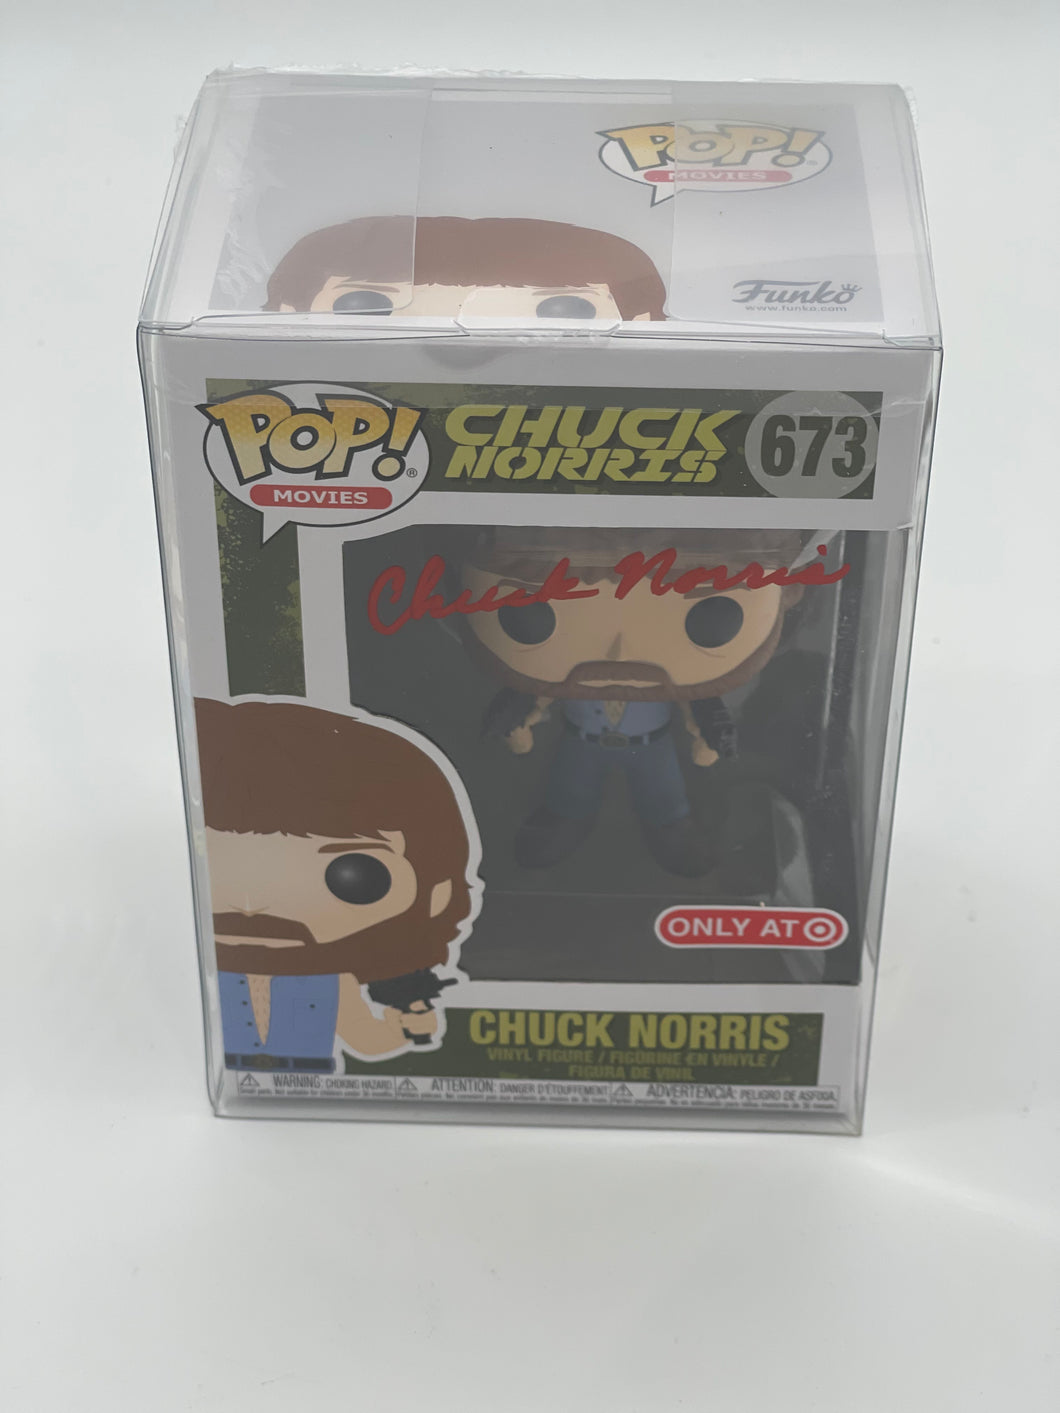 Chuck Norris signed funko pop